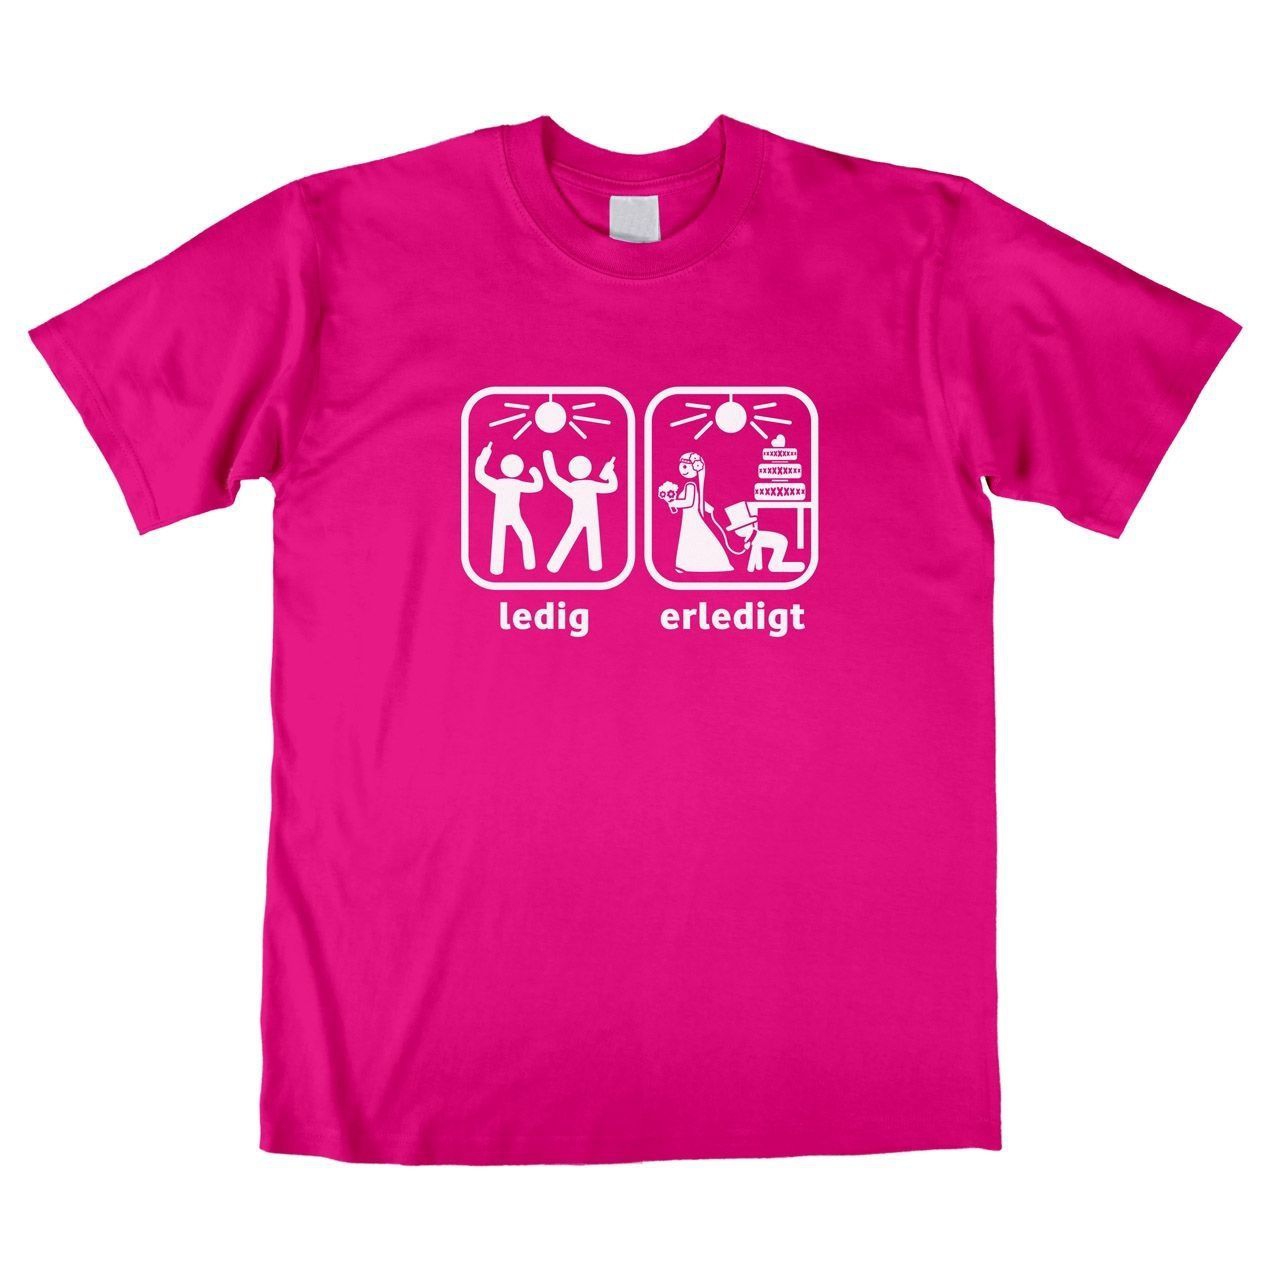 Erledigt Unisex T-Shirt pink Medium